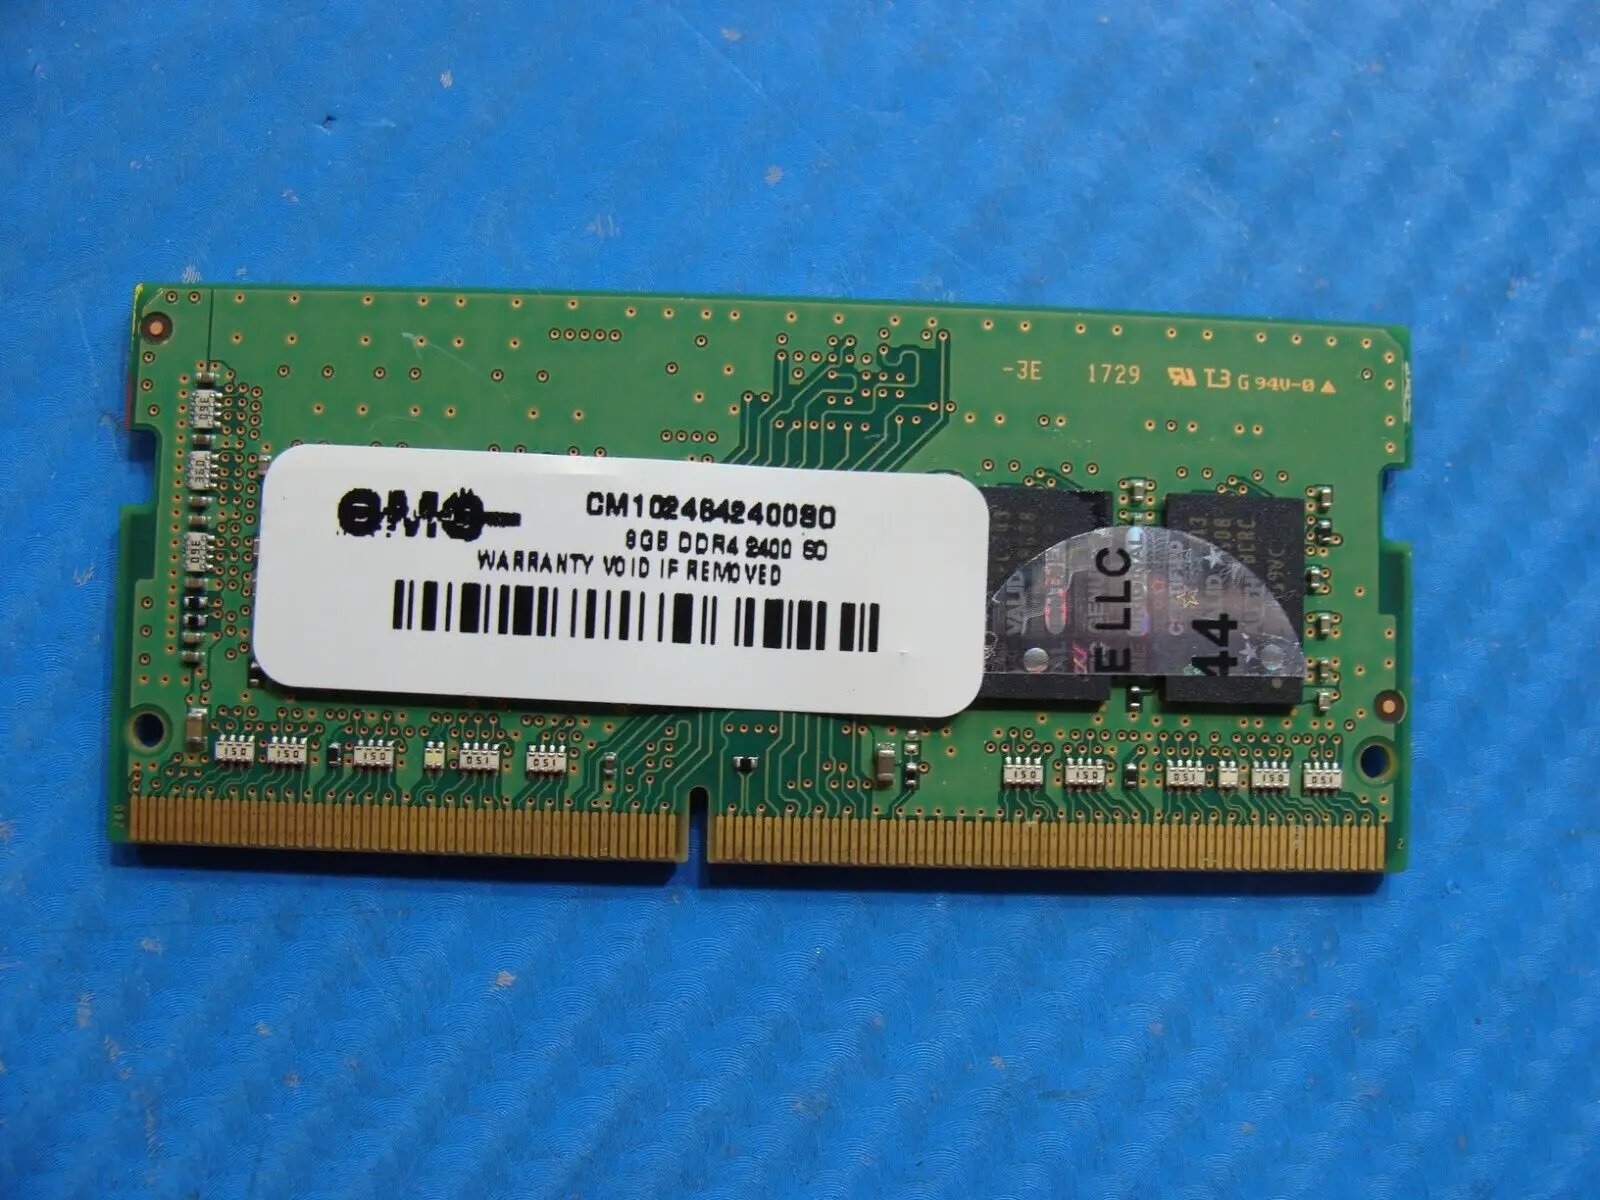 HP 450 G4 Samsung 8GB 1Rx8 PC4-2400T Memory RAM SO-DIMM M471A1K43BB1-CRC